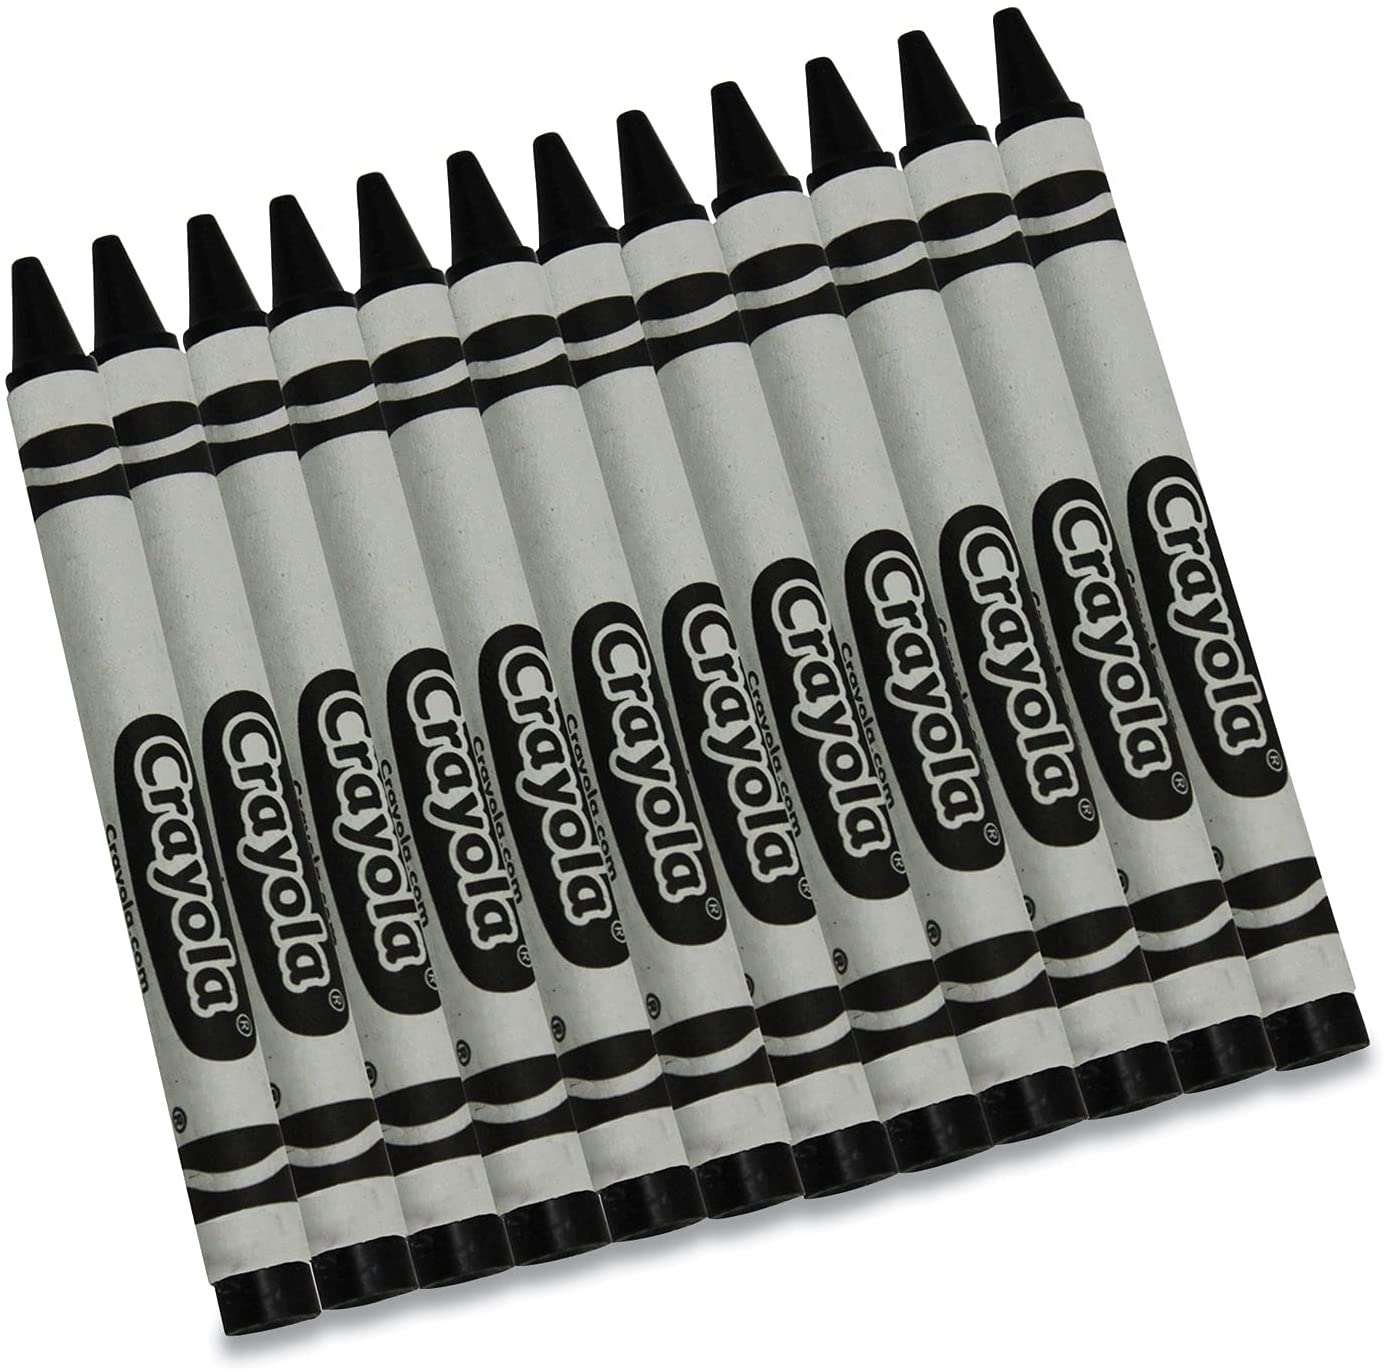 Crayola crayon, 12 pack all black, 17 cents Amazon Warehouse